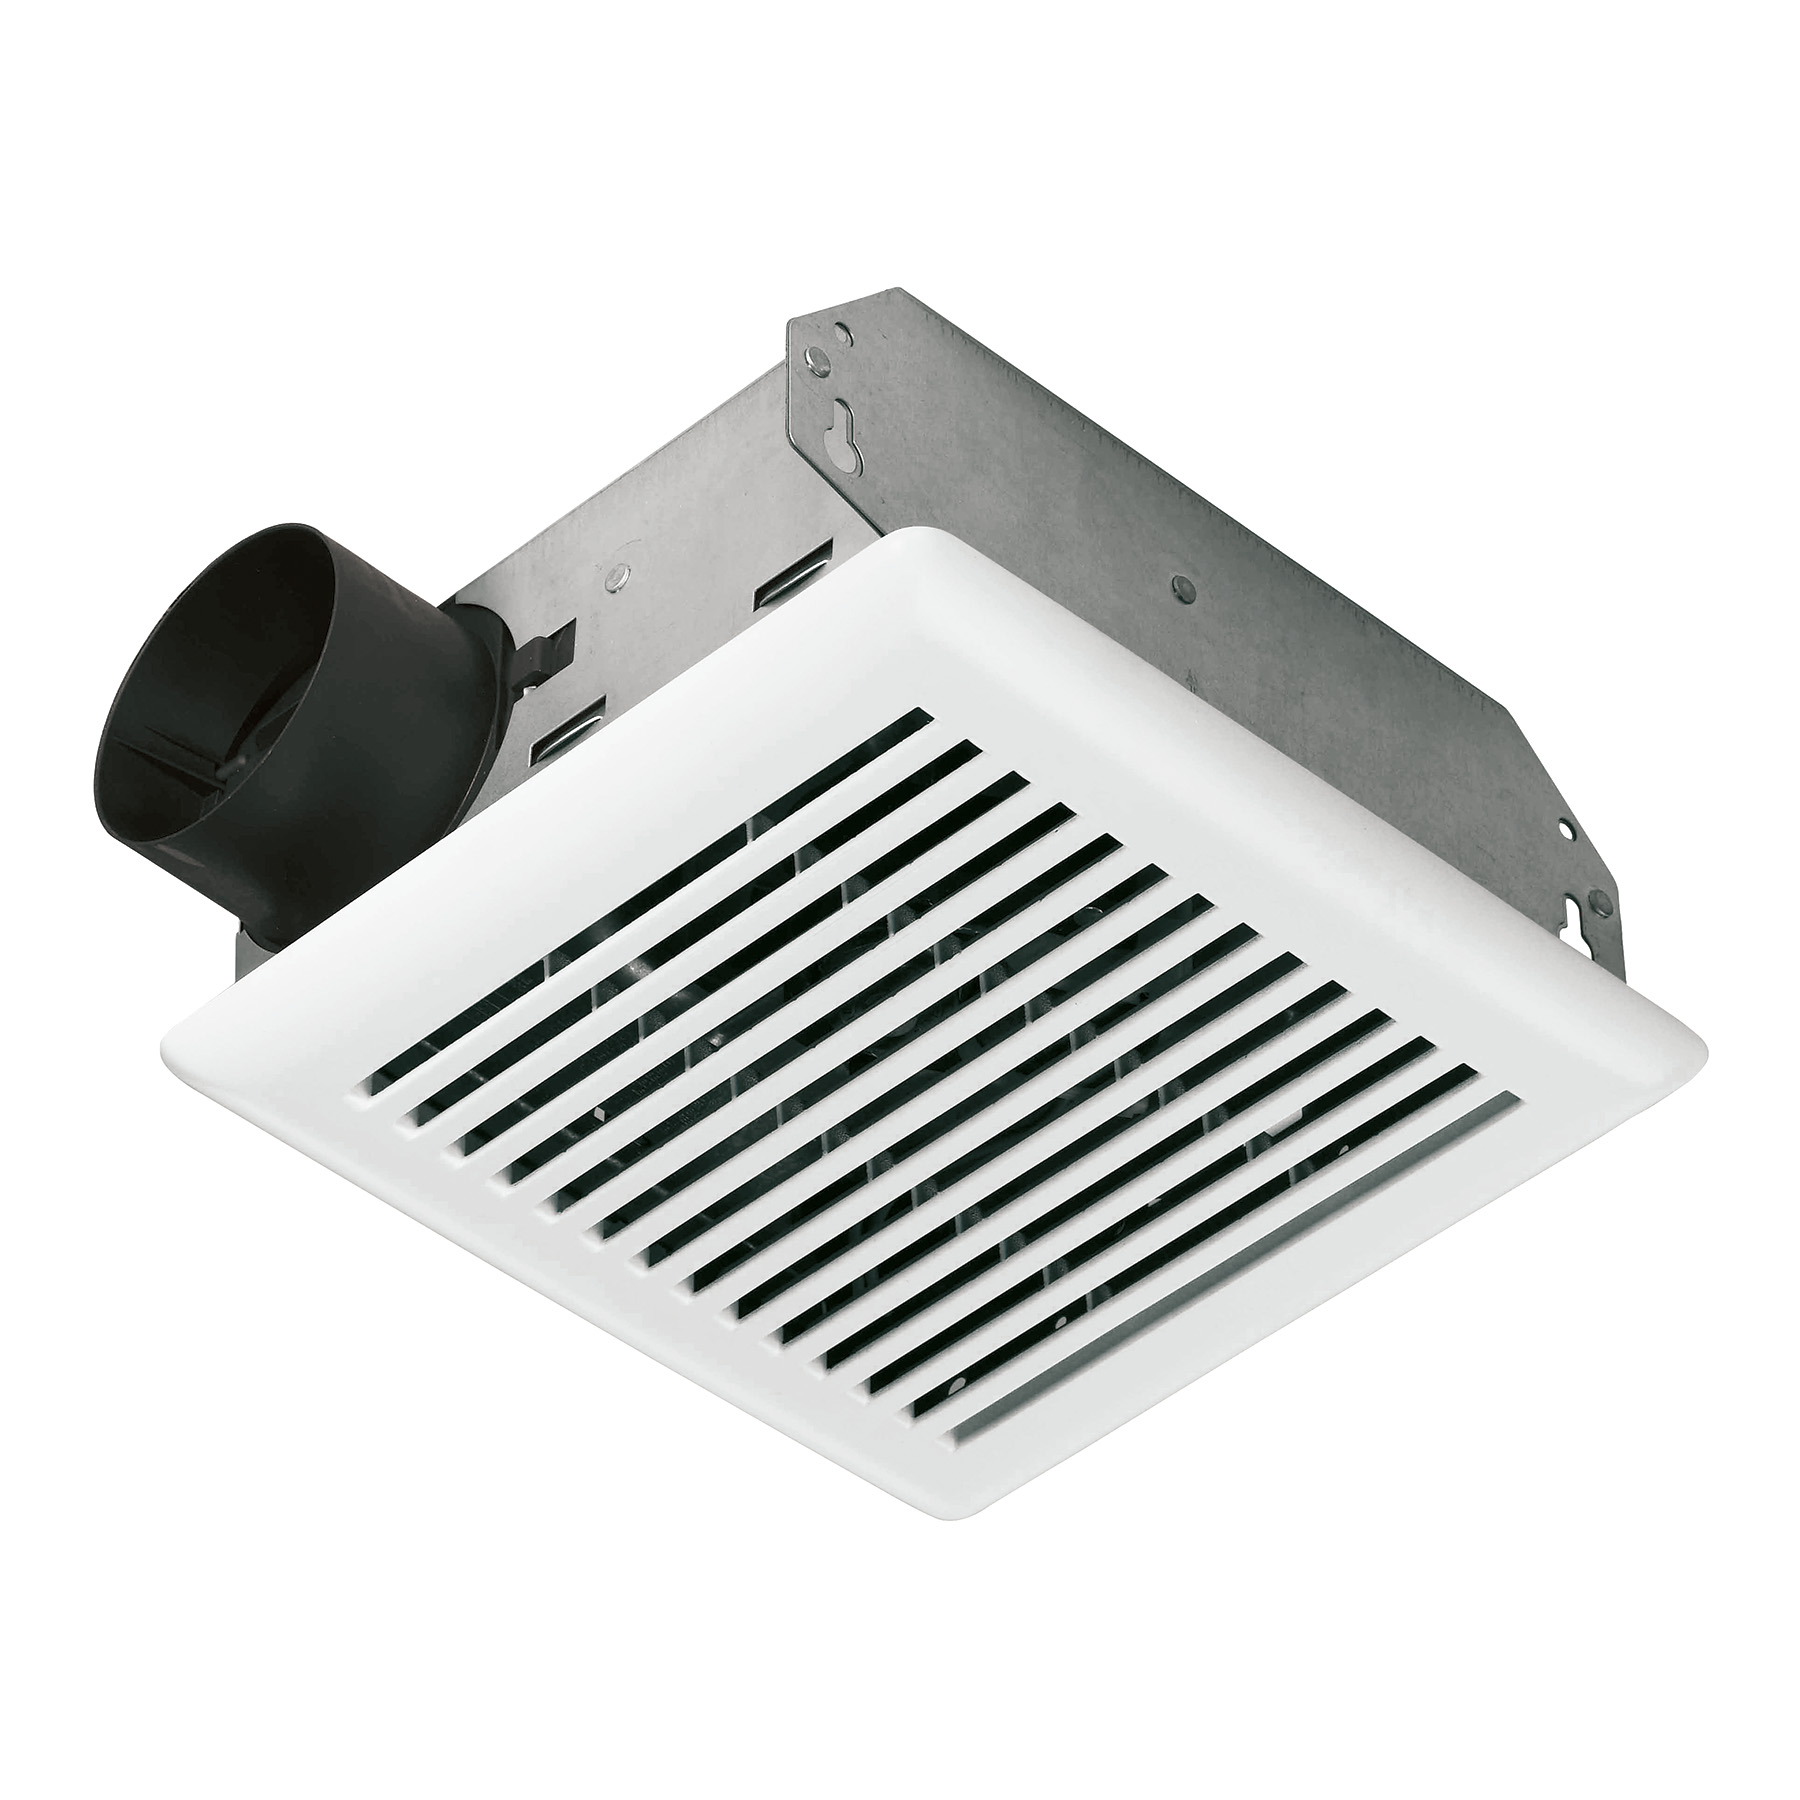 NuTone® 50 CFM Ventilation Fan